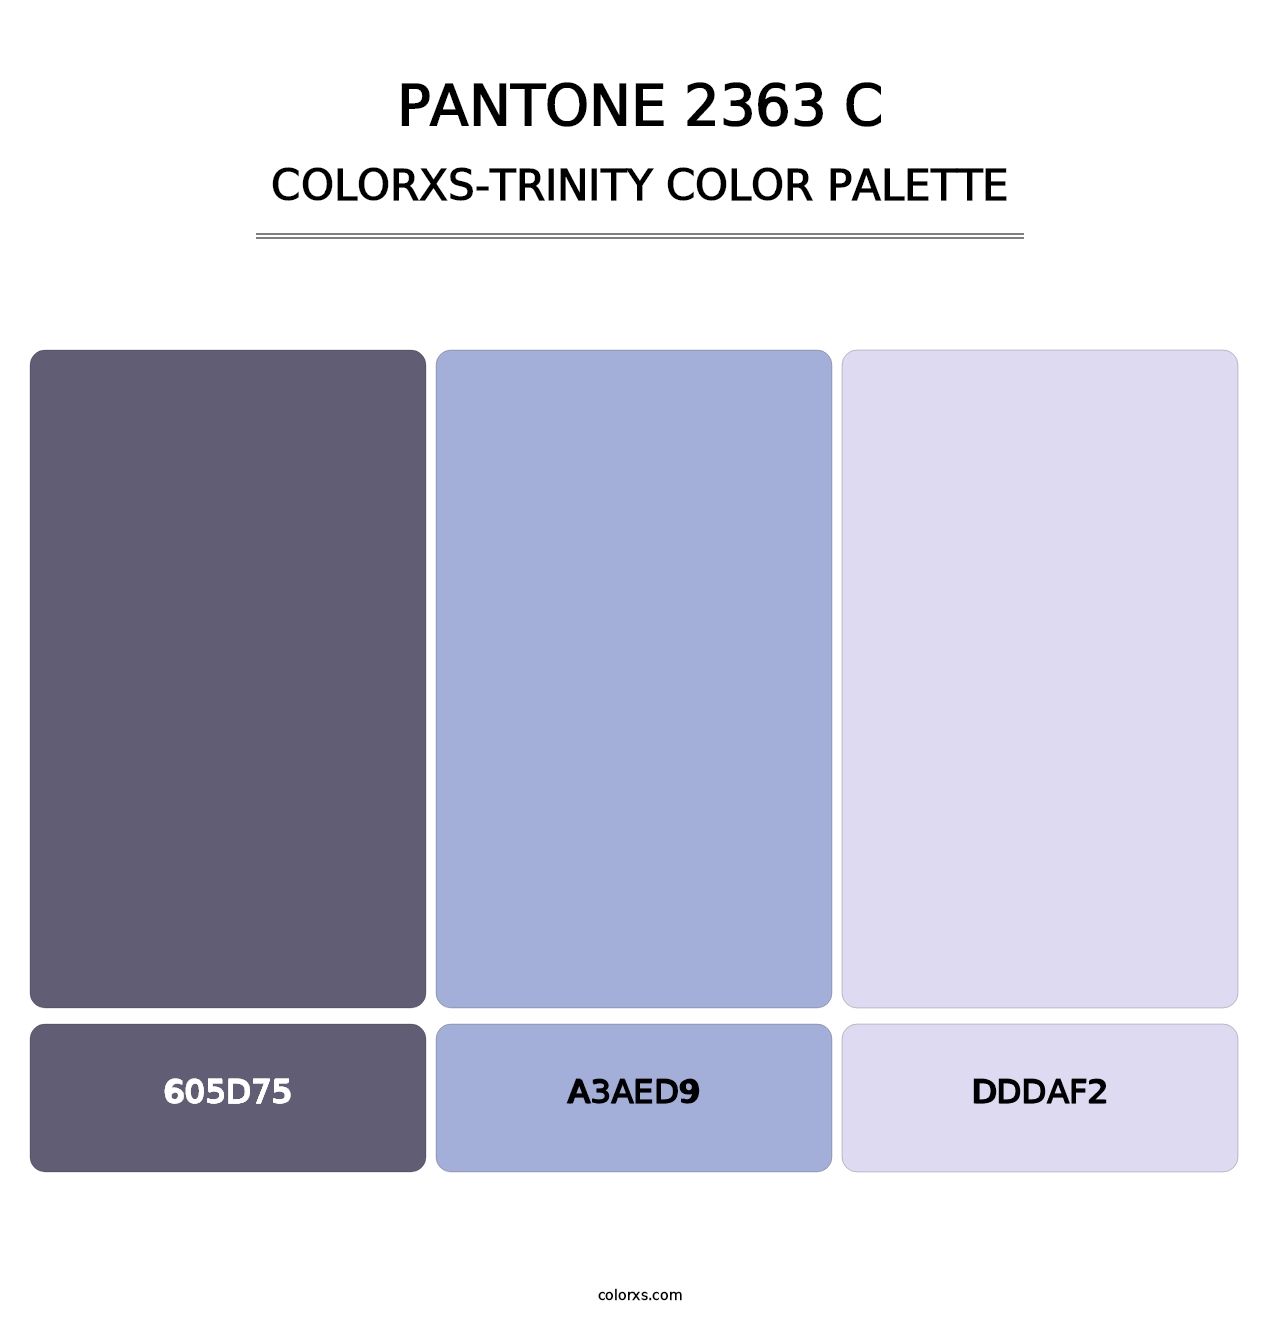 PANTONE 2363 C - Colorxs Trinity Palette